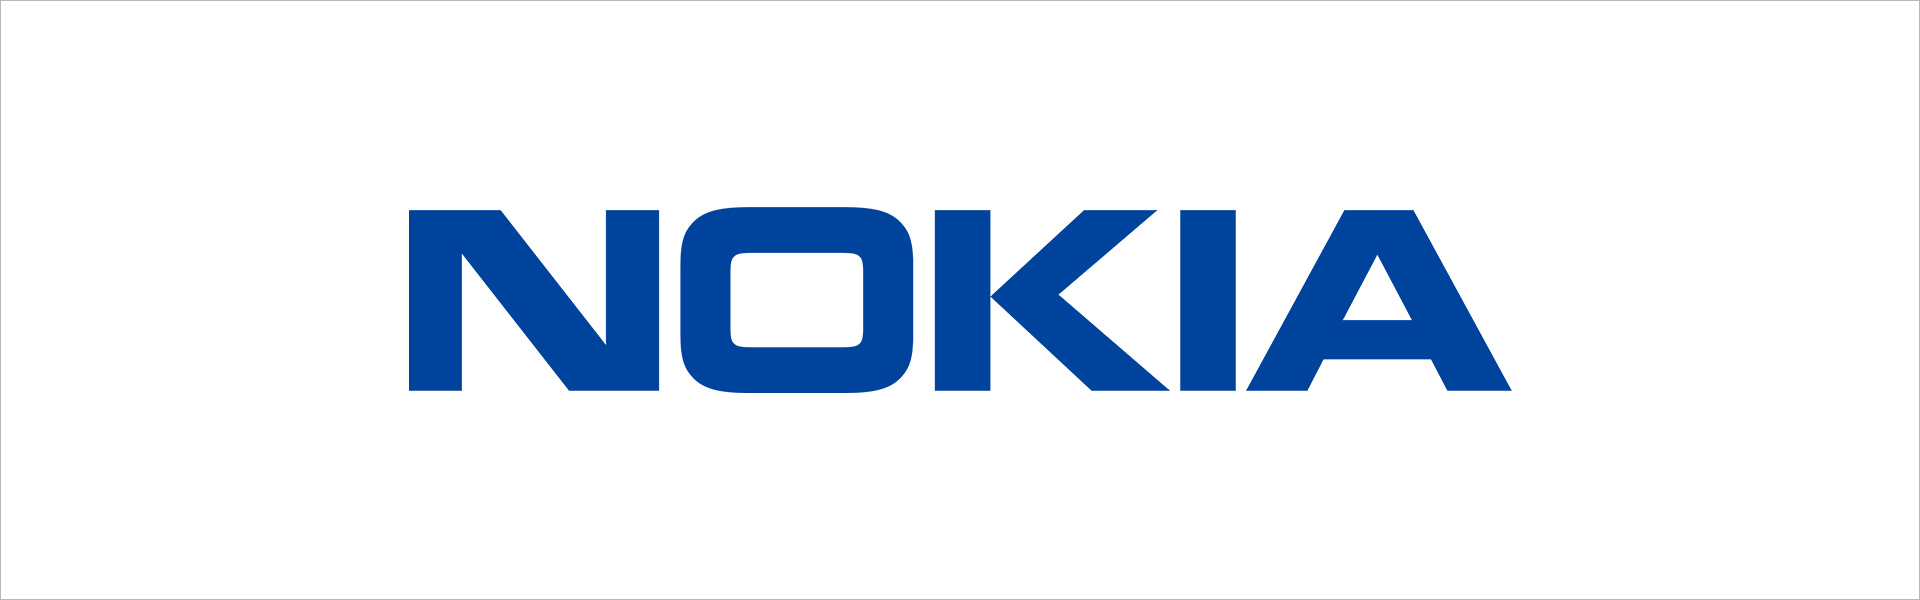 Nokia 800 (TA-1186) Dual SIM, Black Nokia